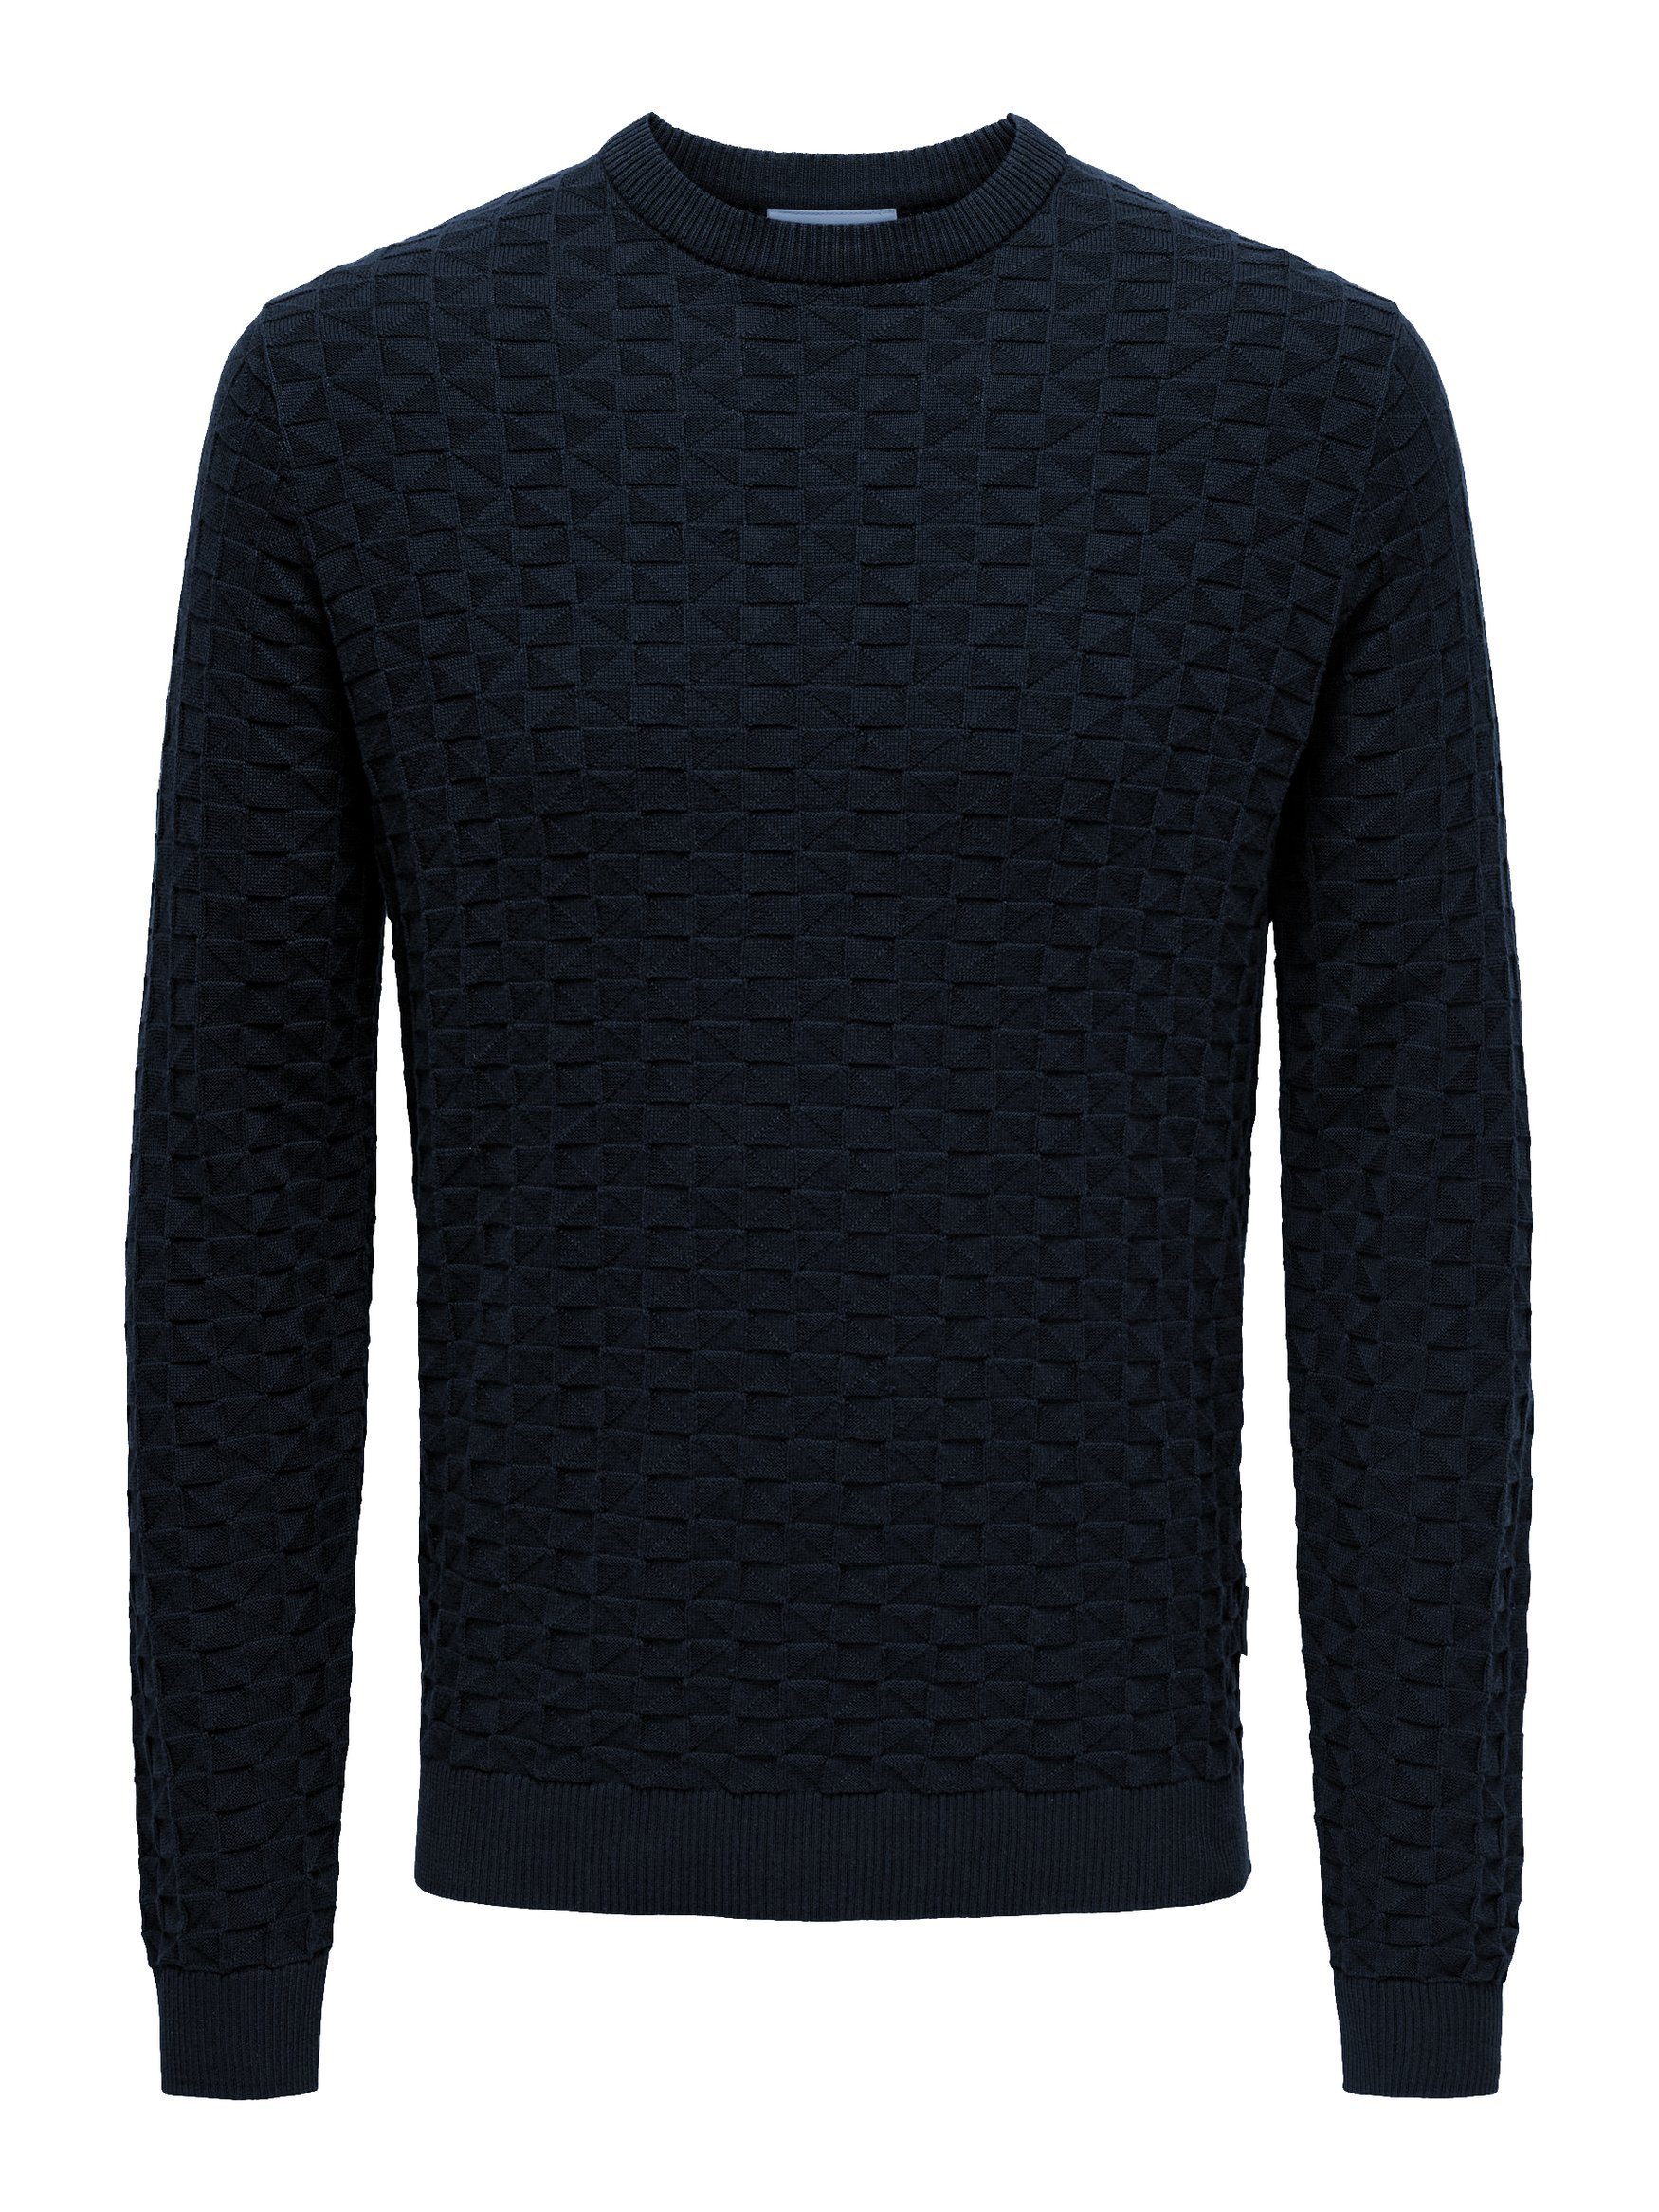 Strick SONS Geripptes Dunkelblau Karo Design ONLY & Muster 6742 ONSKALLE Pullover Strickpullover in